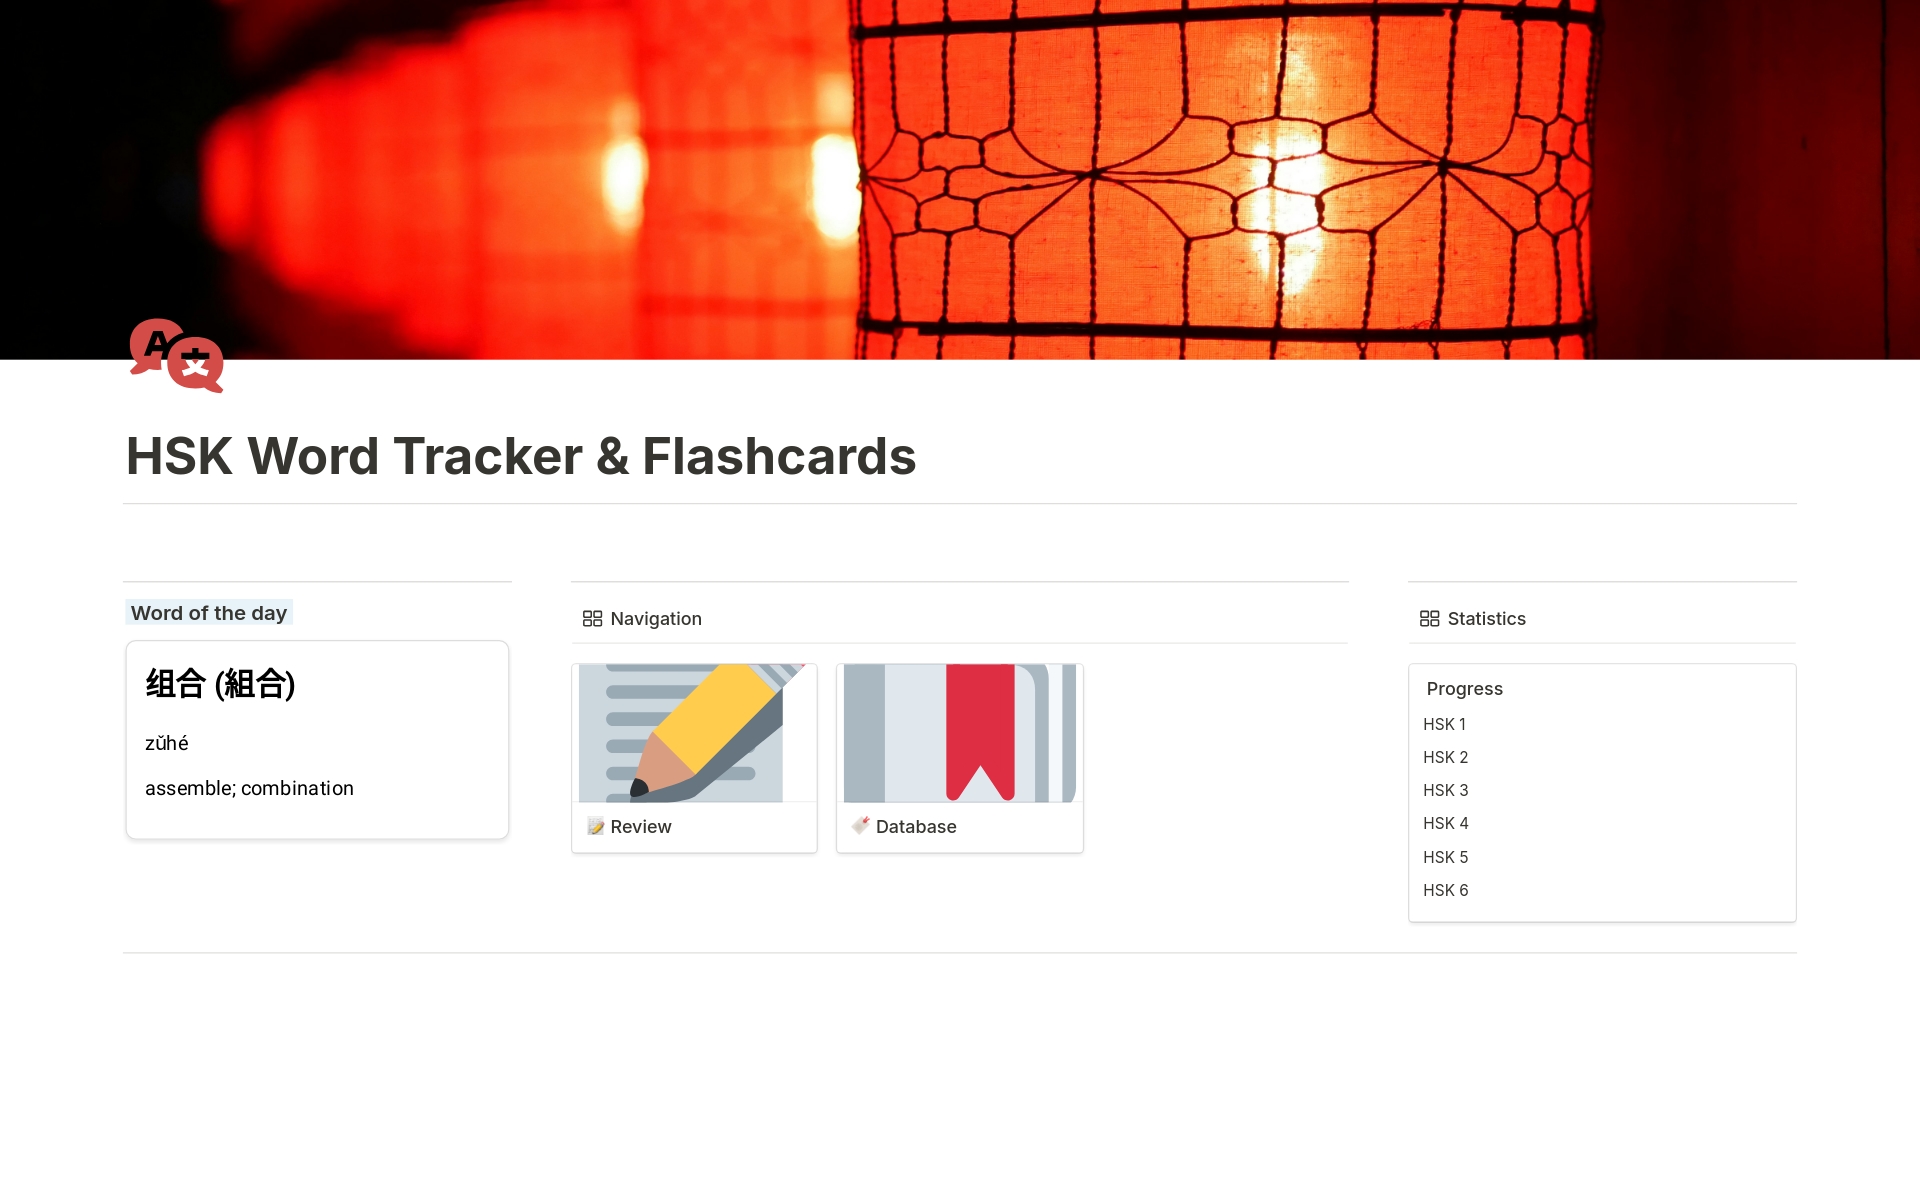 Vista previa de plantilla para HSK Word Tracker & Flashcards